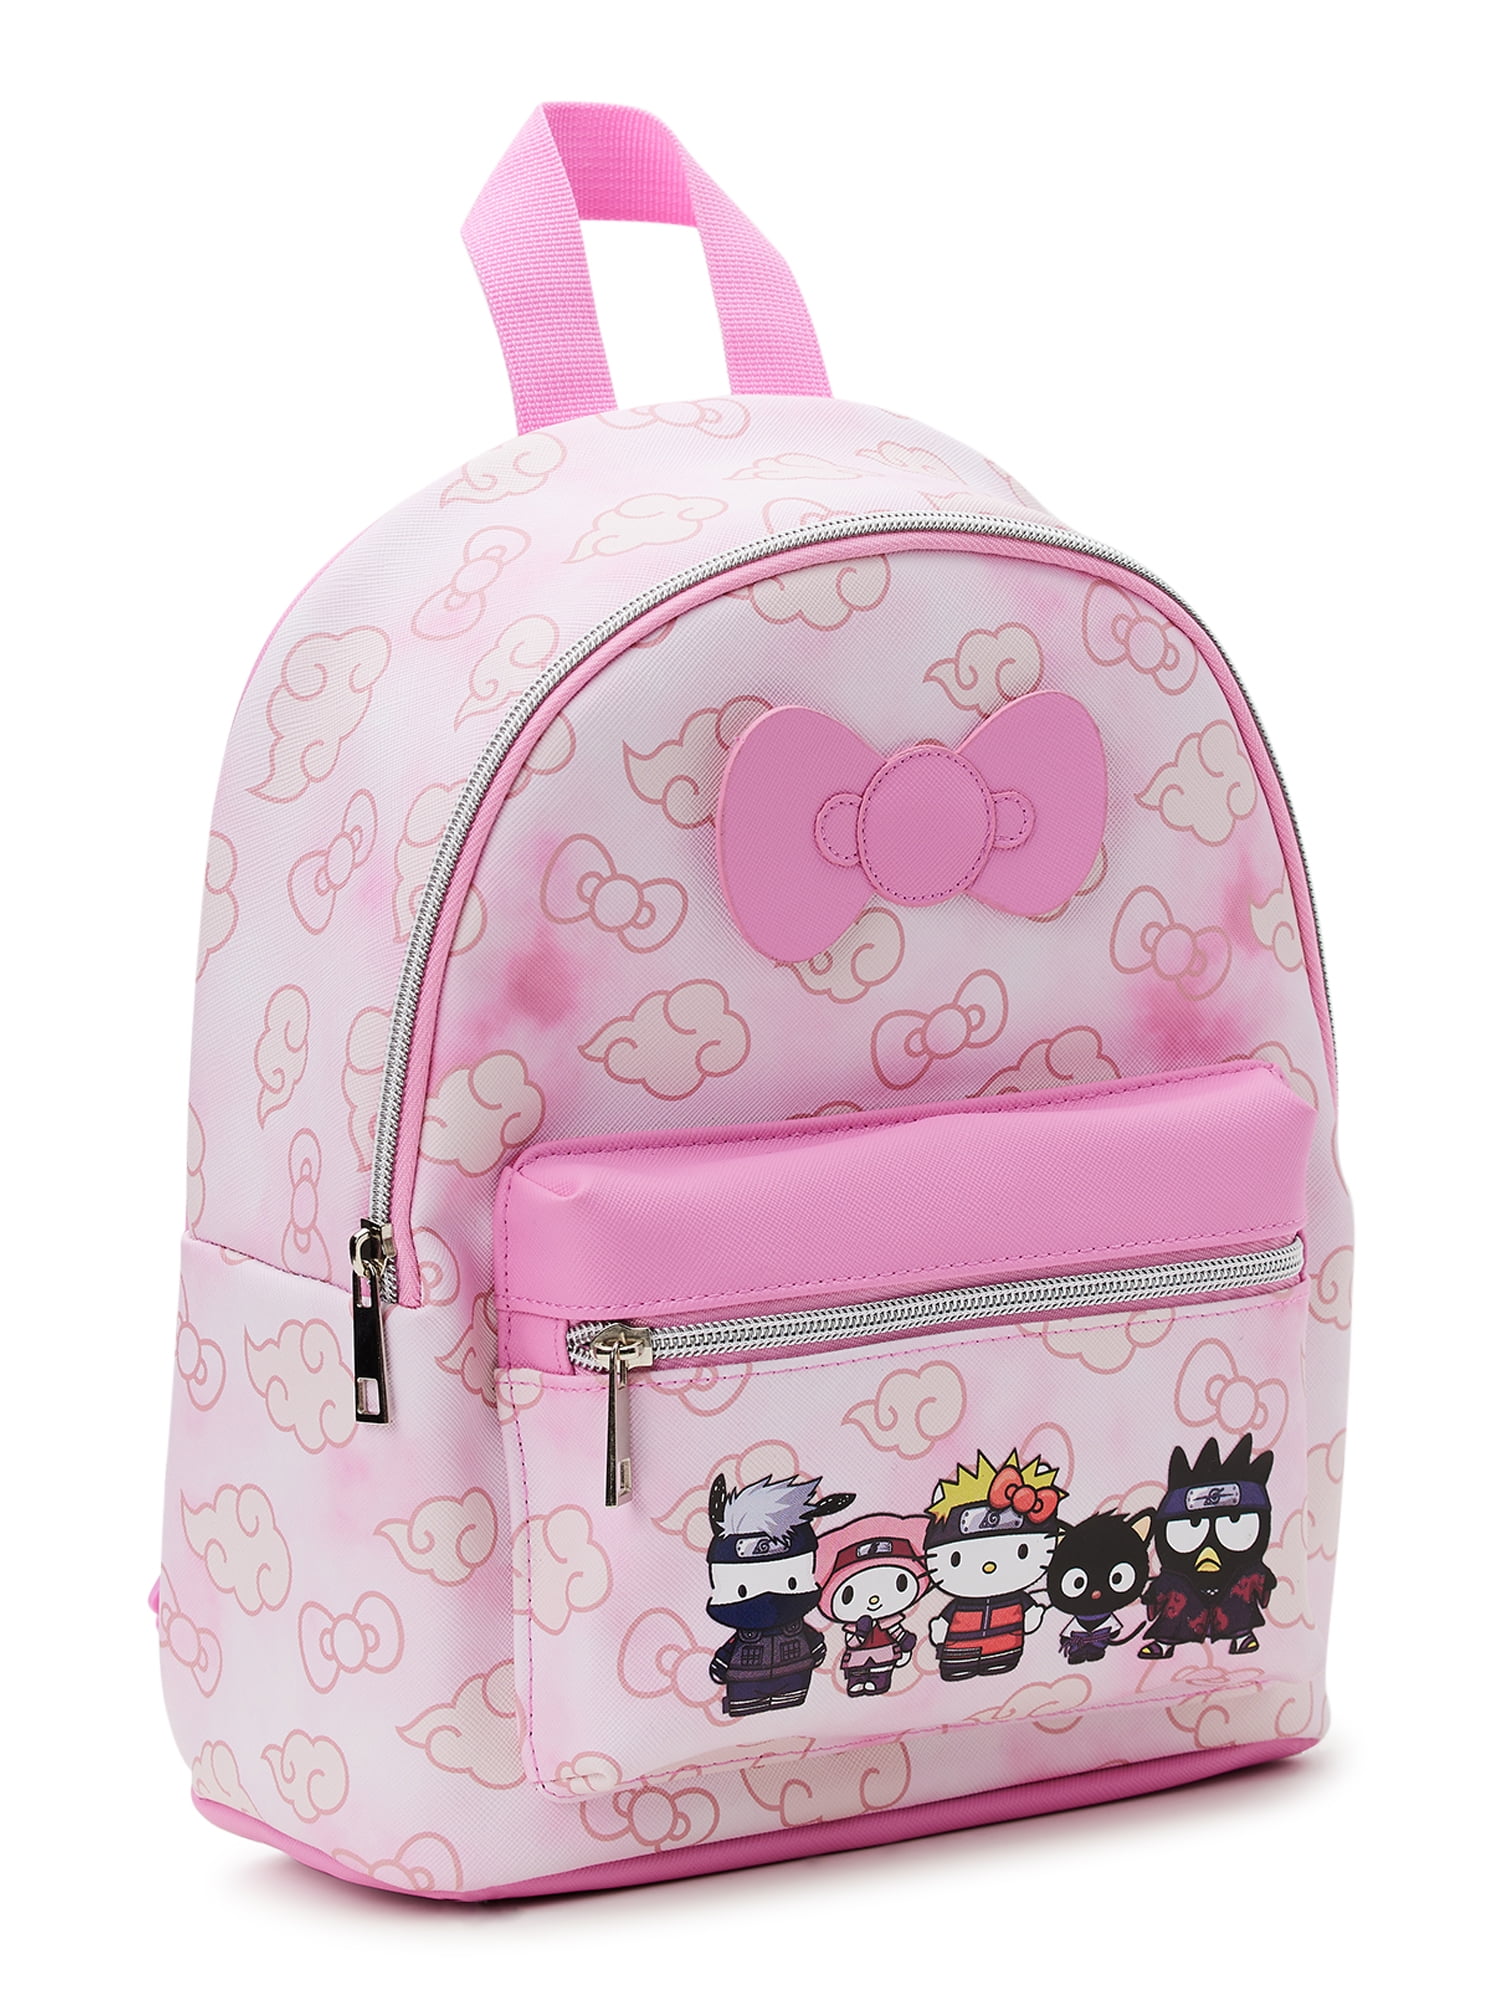 Naruto Shippuden x Sanrio Hello Kitty Women's Graphic Mini Backpack, Pink 